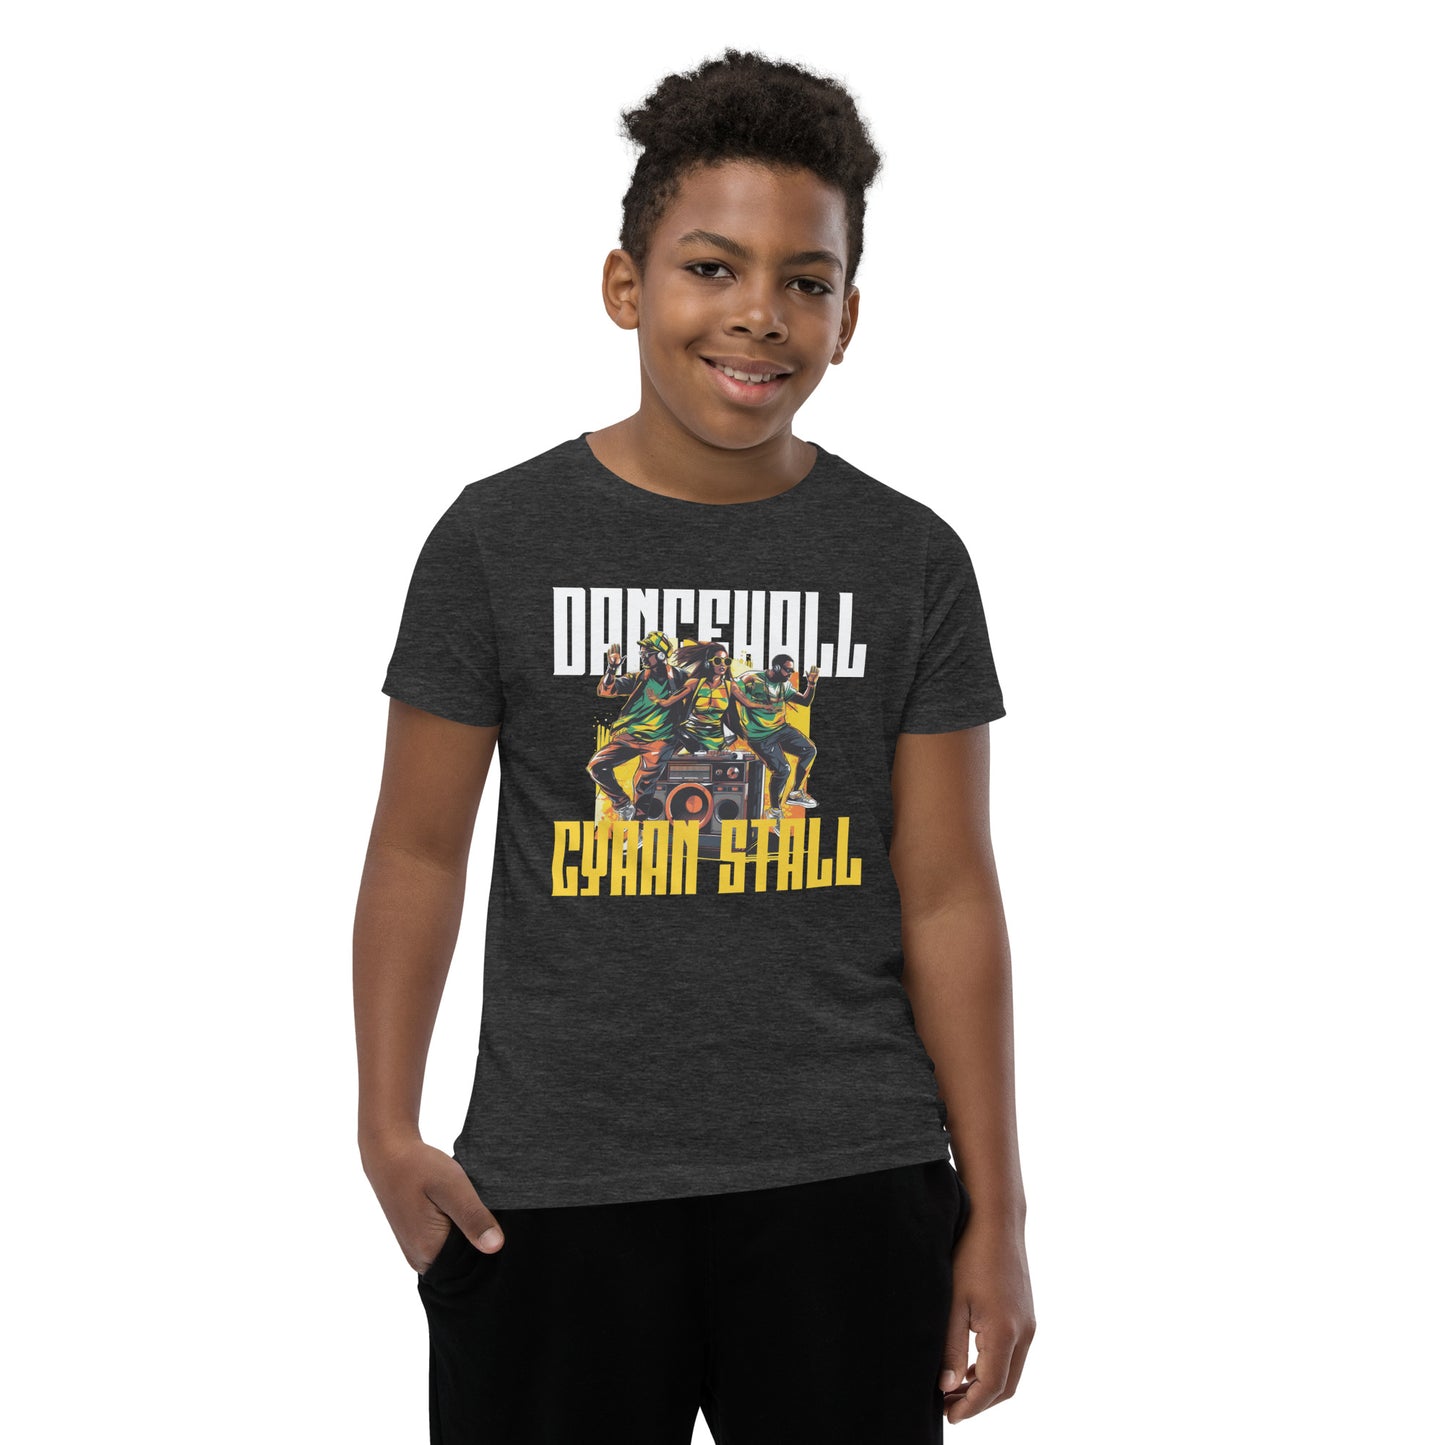 Youth Short Sleeve "Dancehall cyaan stall" T-Shirt